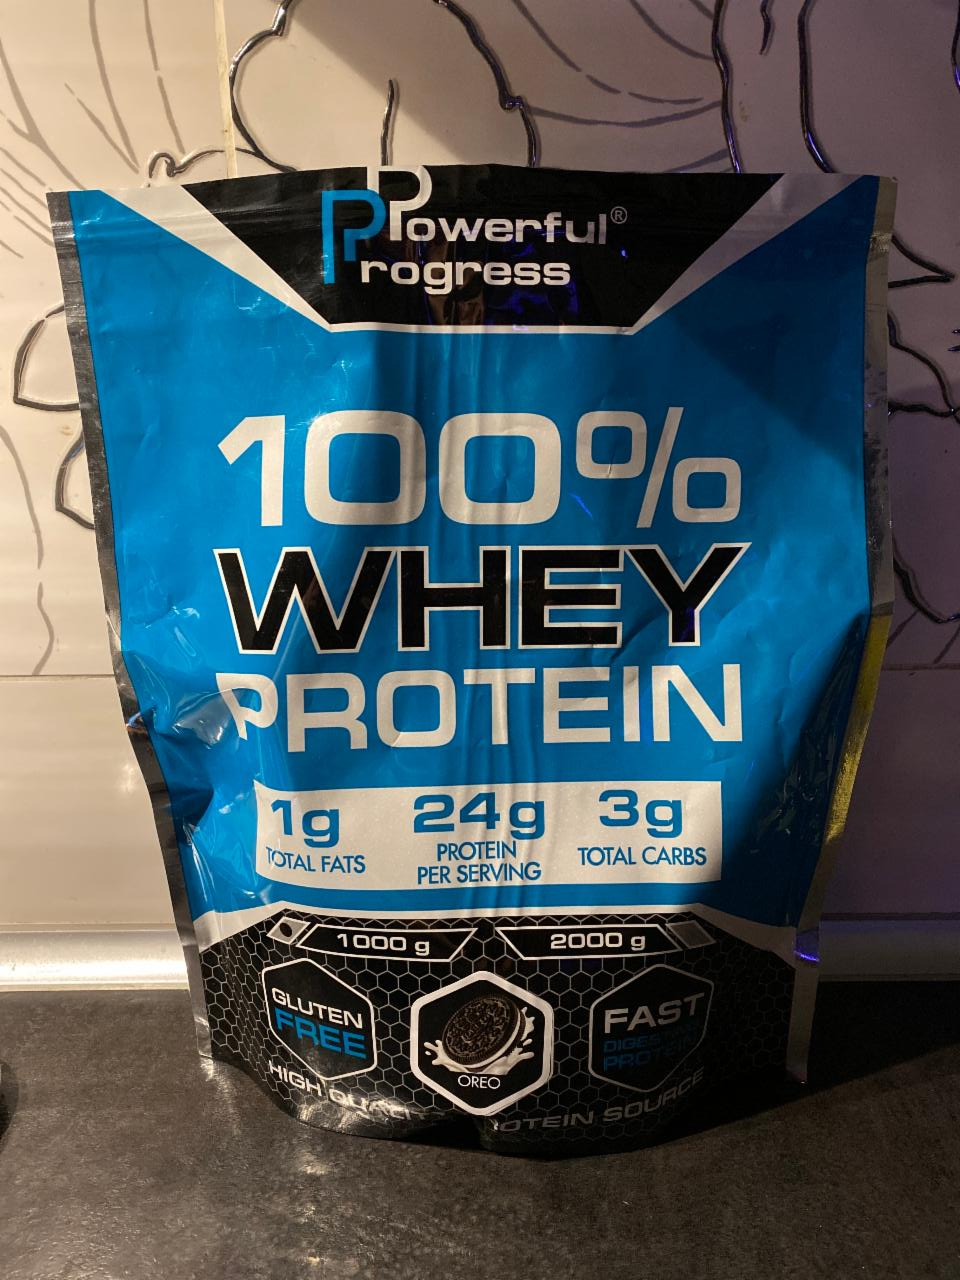 Фото - Протеин со вкусом печенья Oreo 100% Whey Protein Powerful Progress